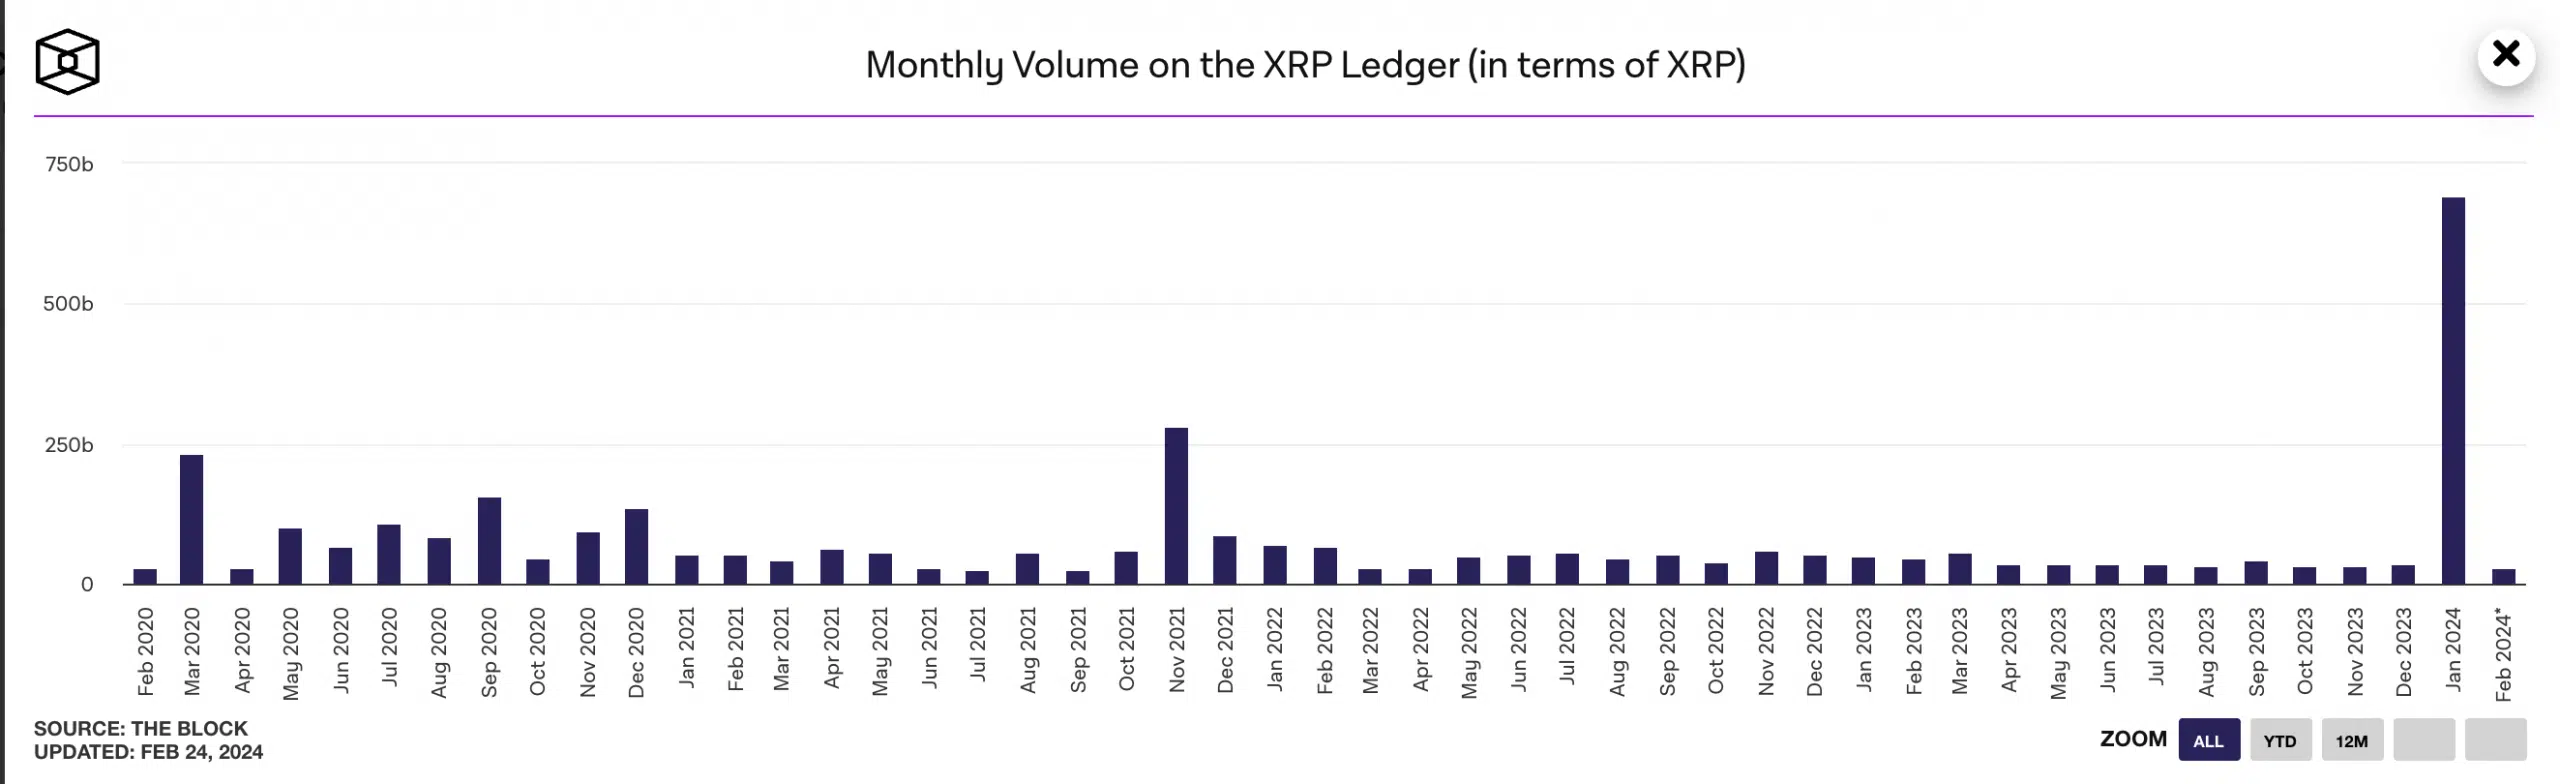 Volumen mensual de XRPL 